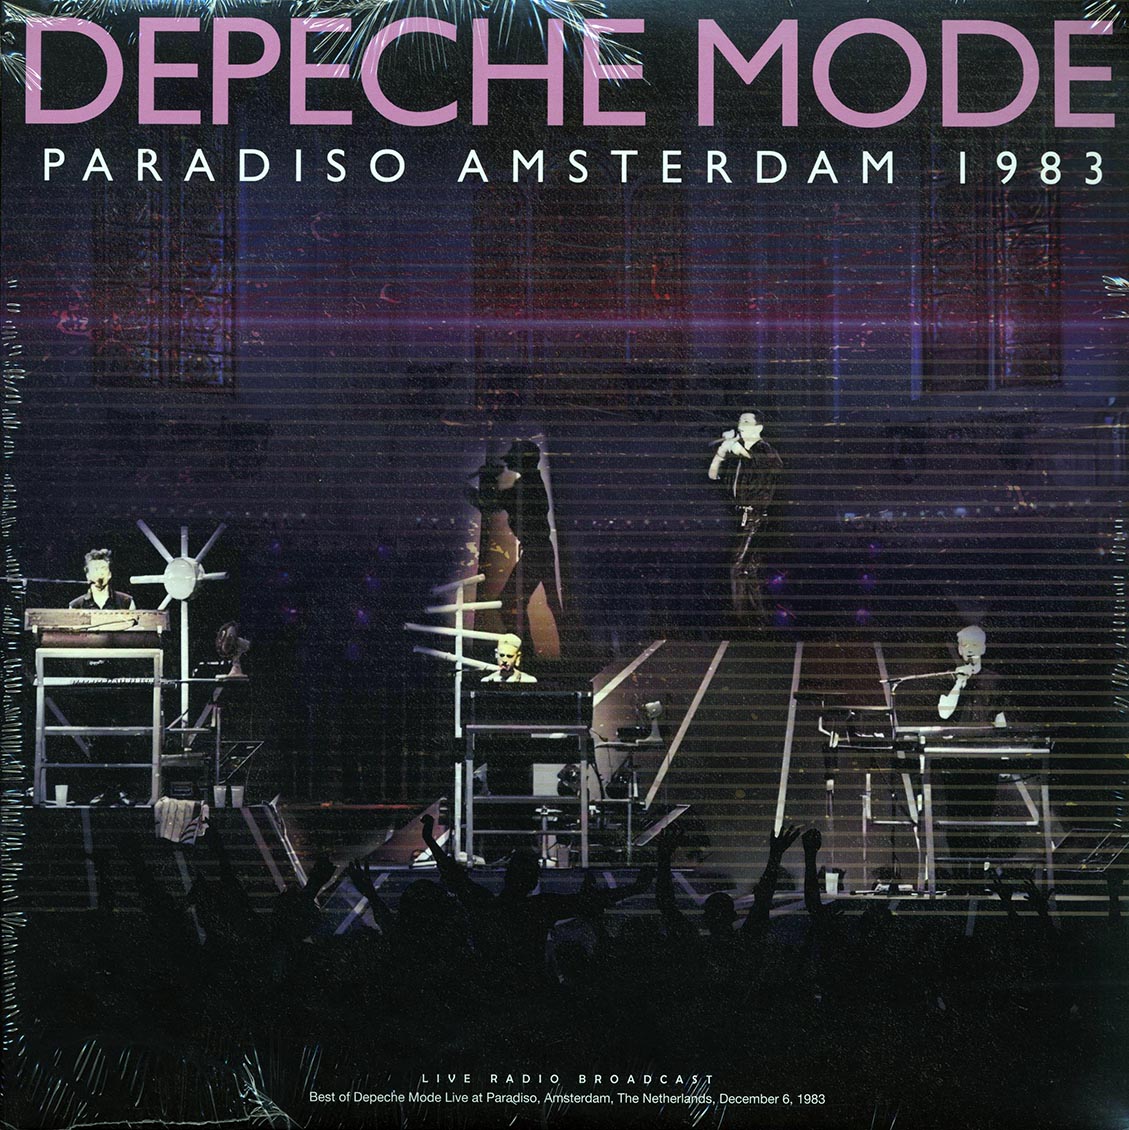 Depeche Mode - Paridiso Amsterdam 1983 - Vinyl LP